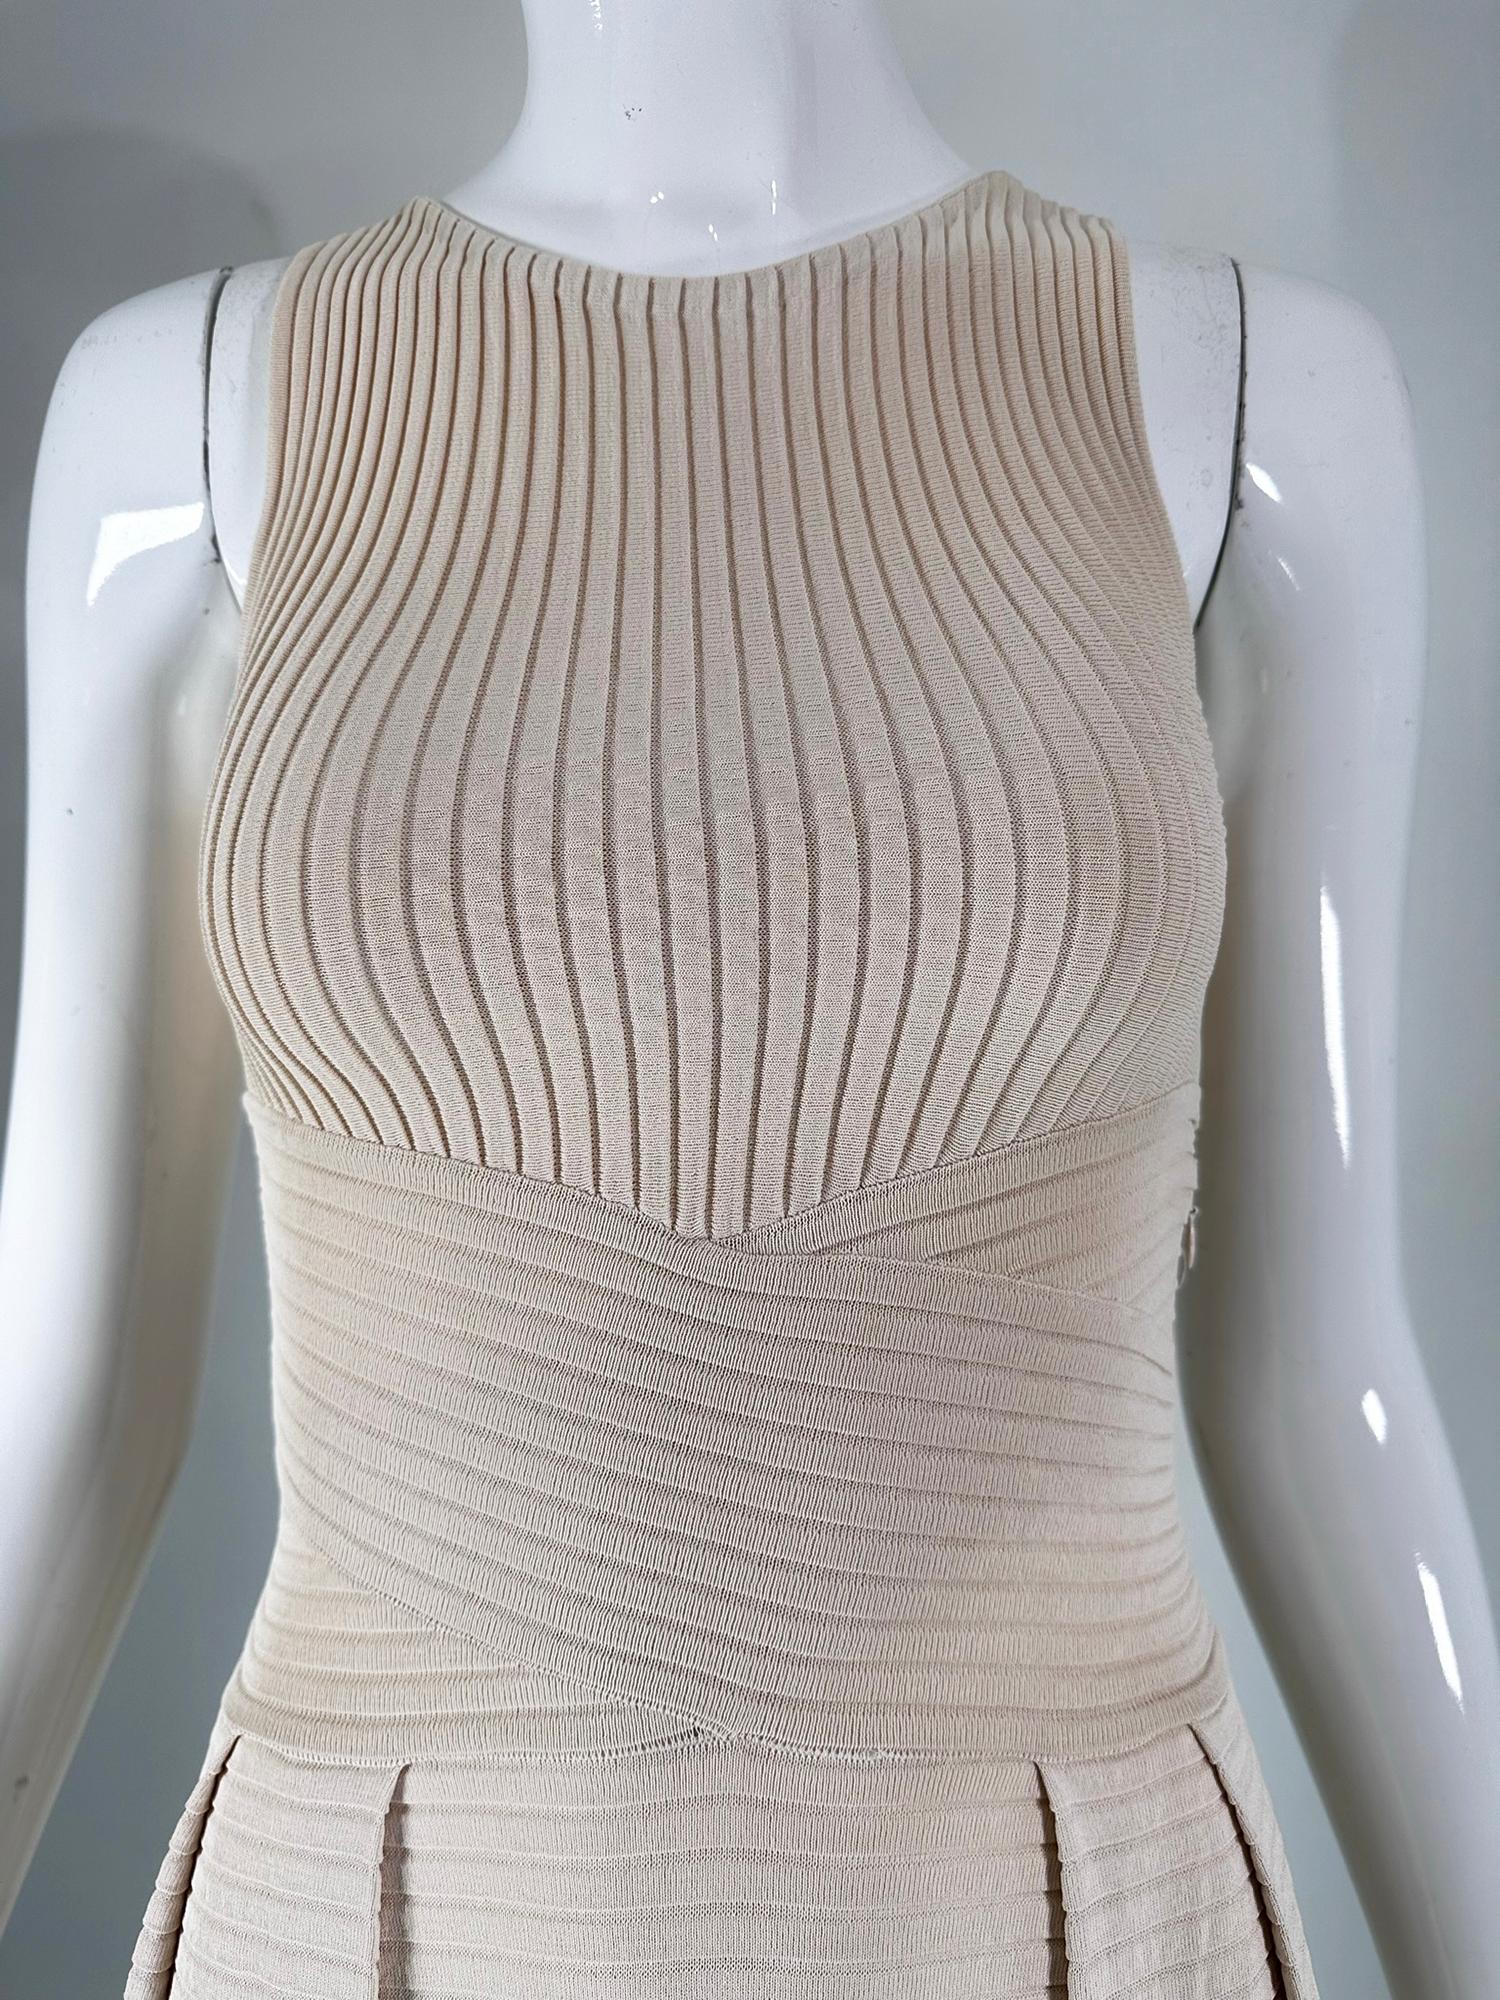 Christian Dior Paris Ribbed Knit Beige Tank Dress 2010 For Sale 11